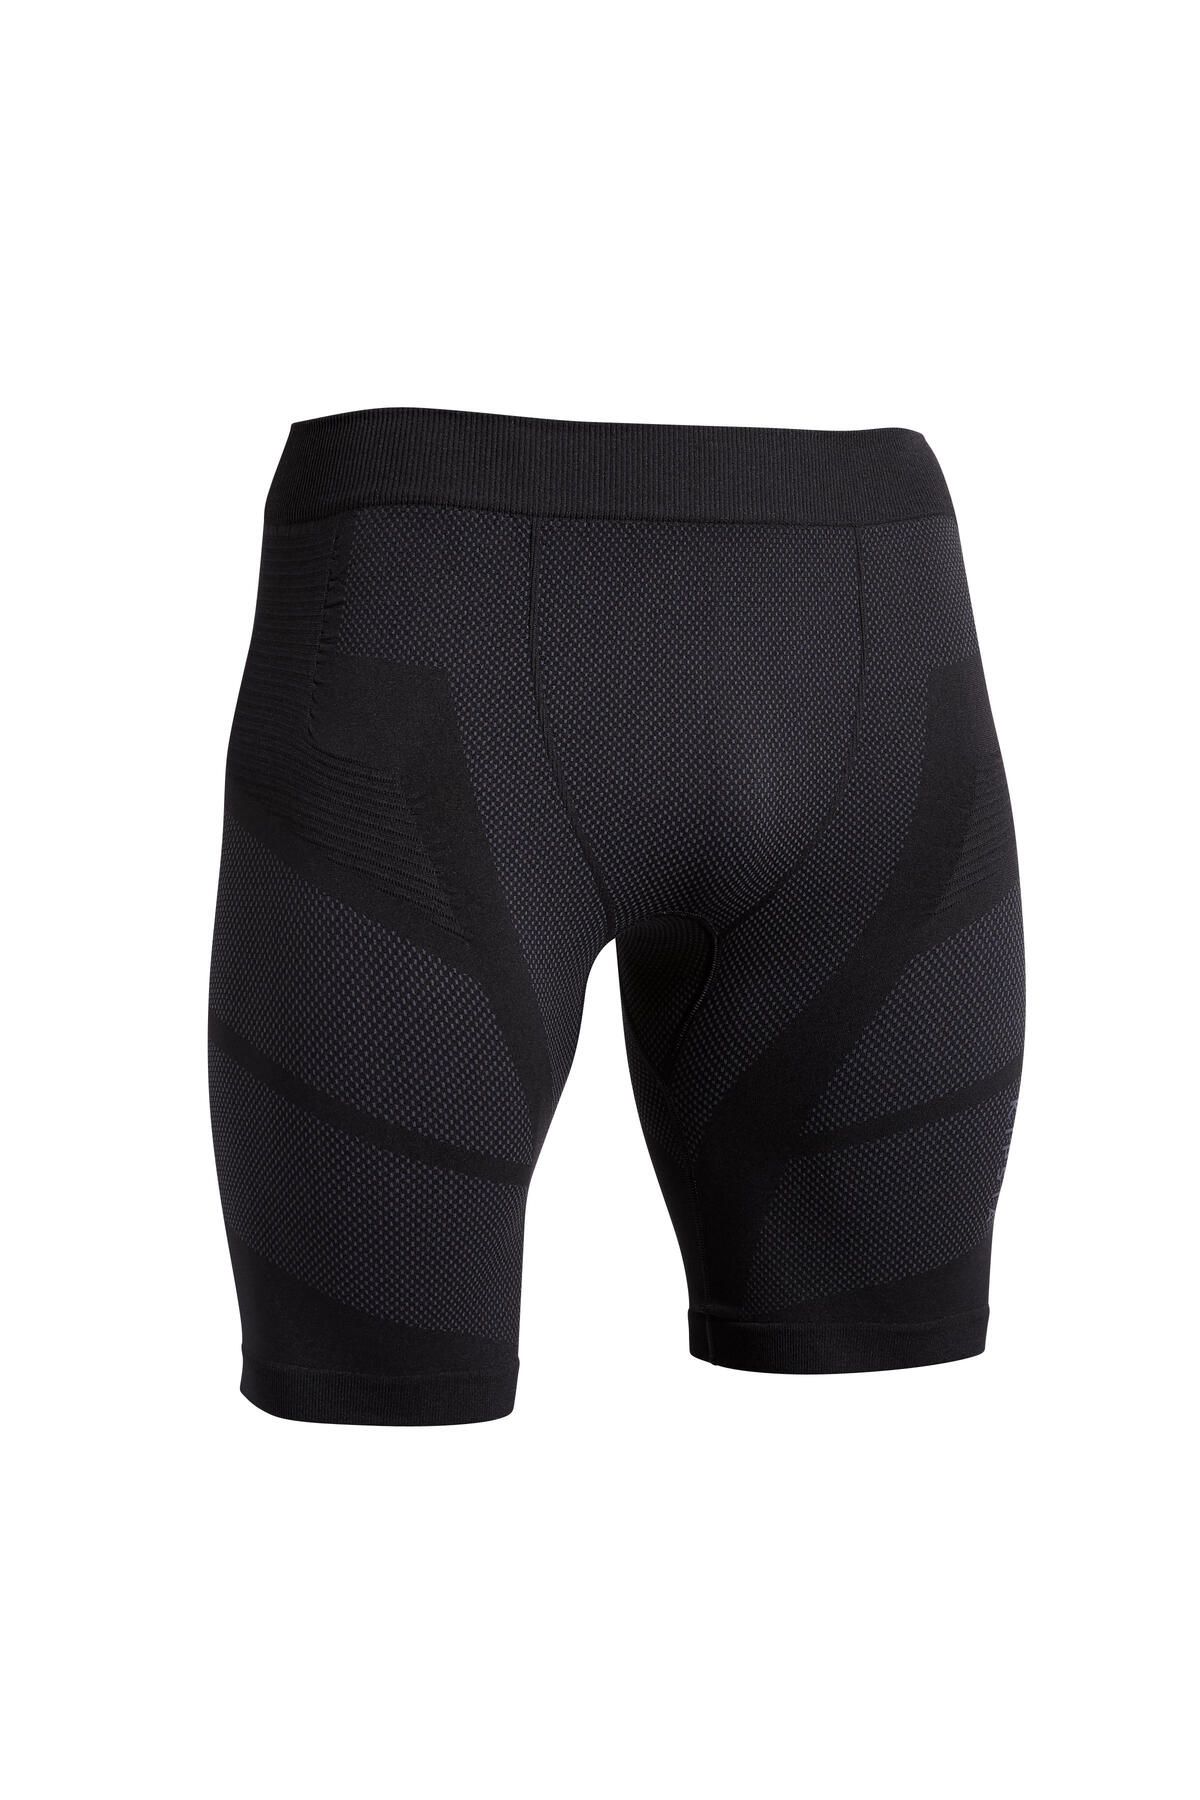 Decathlon Football Tights Underwear - Black - Adult - Keepdry 500